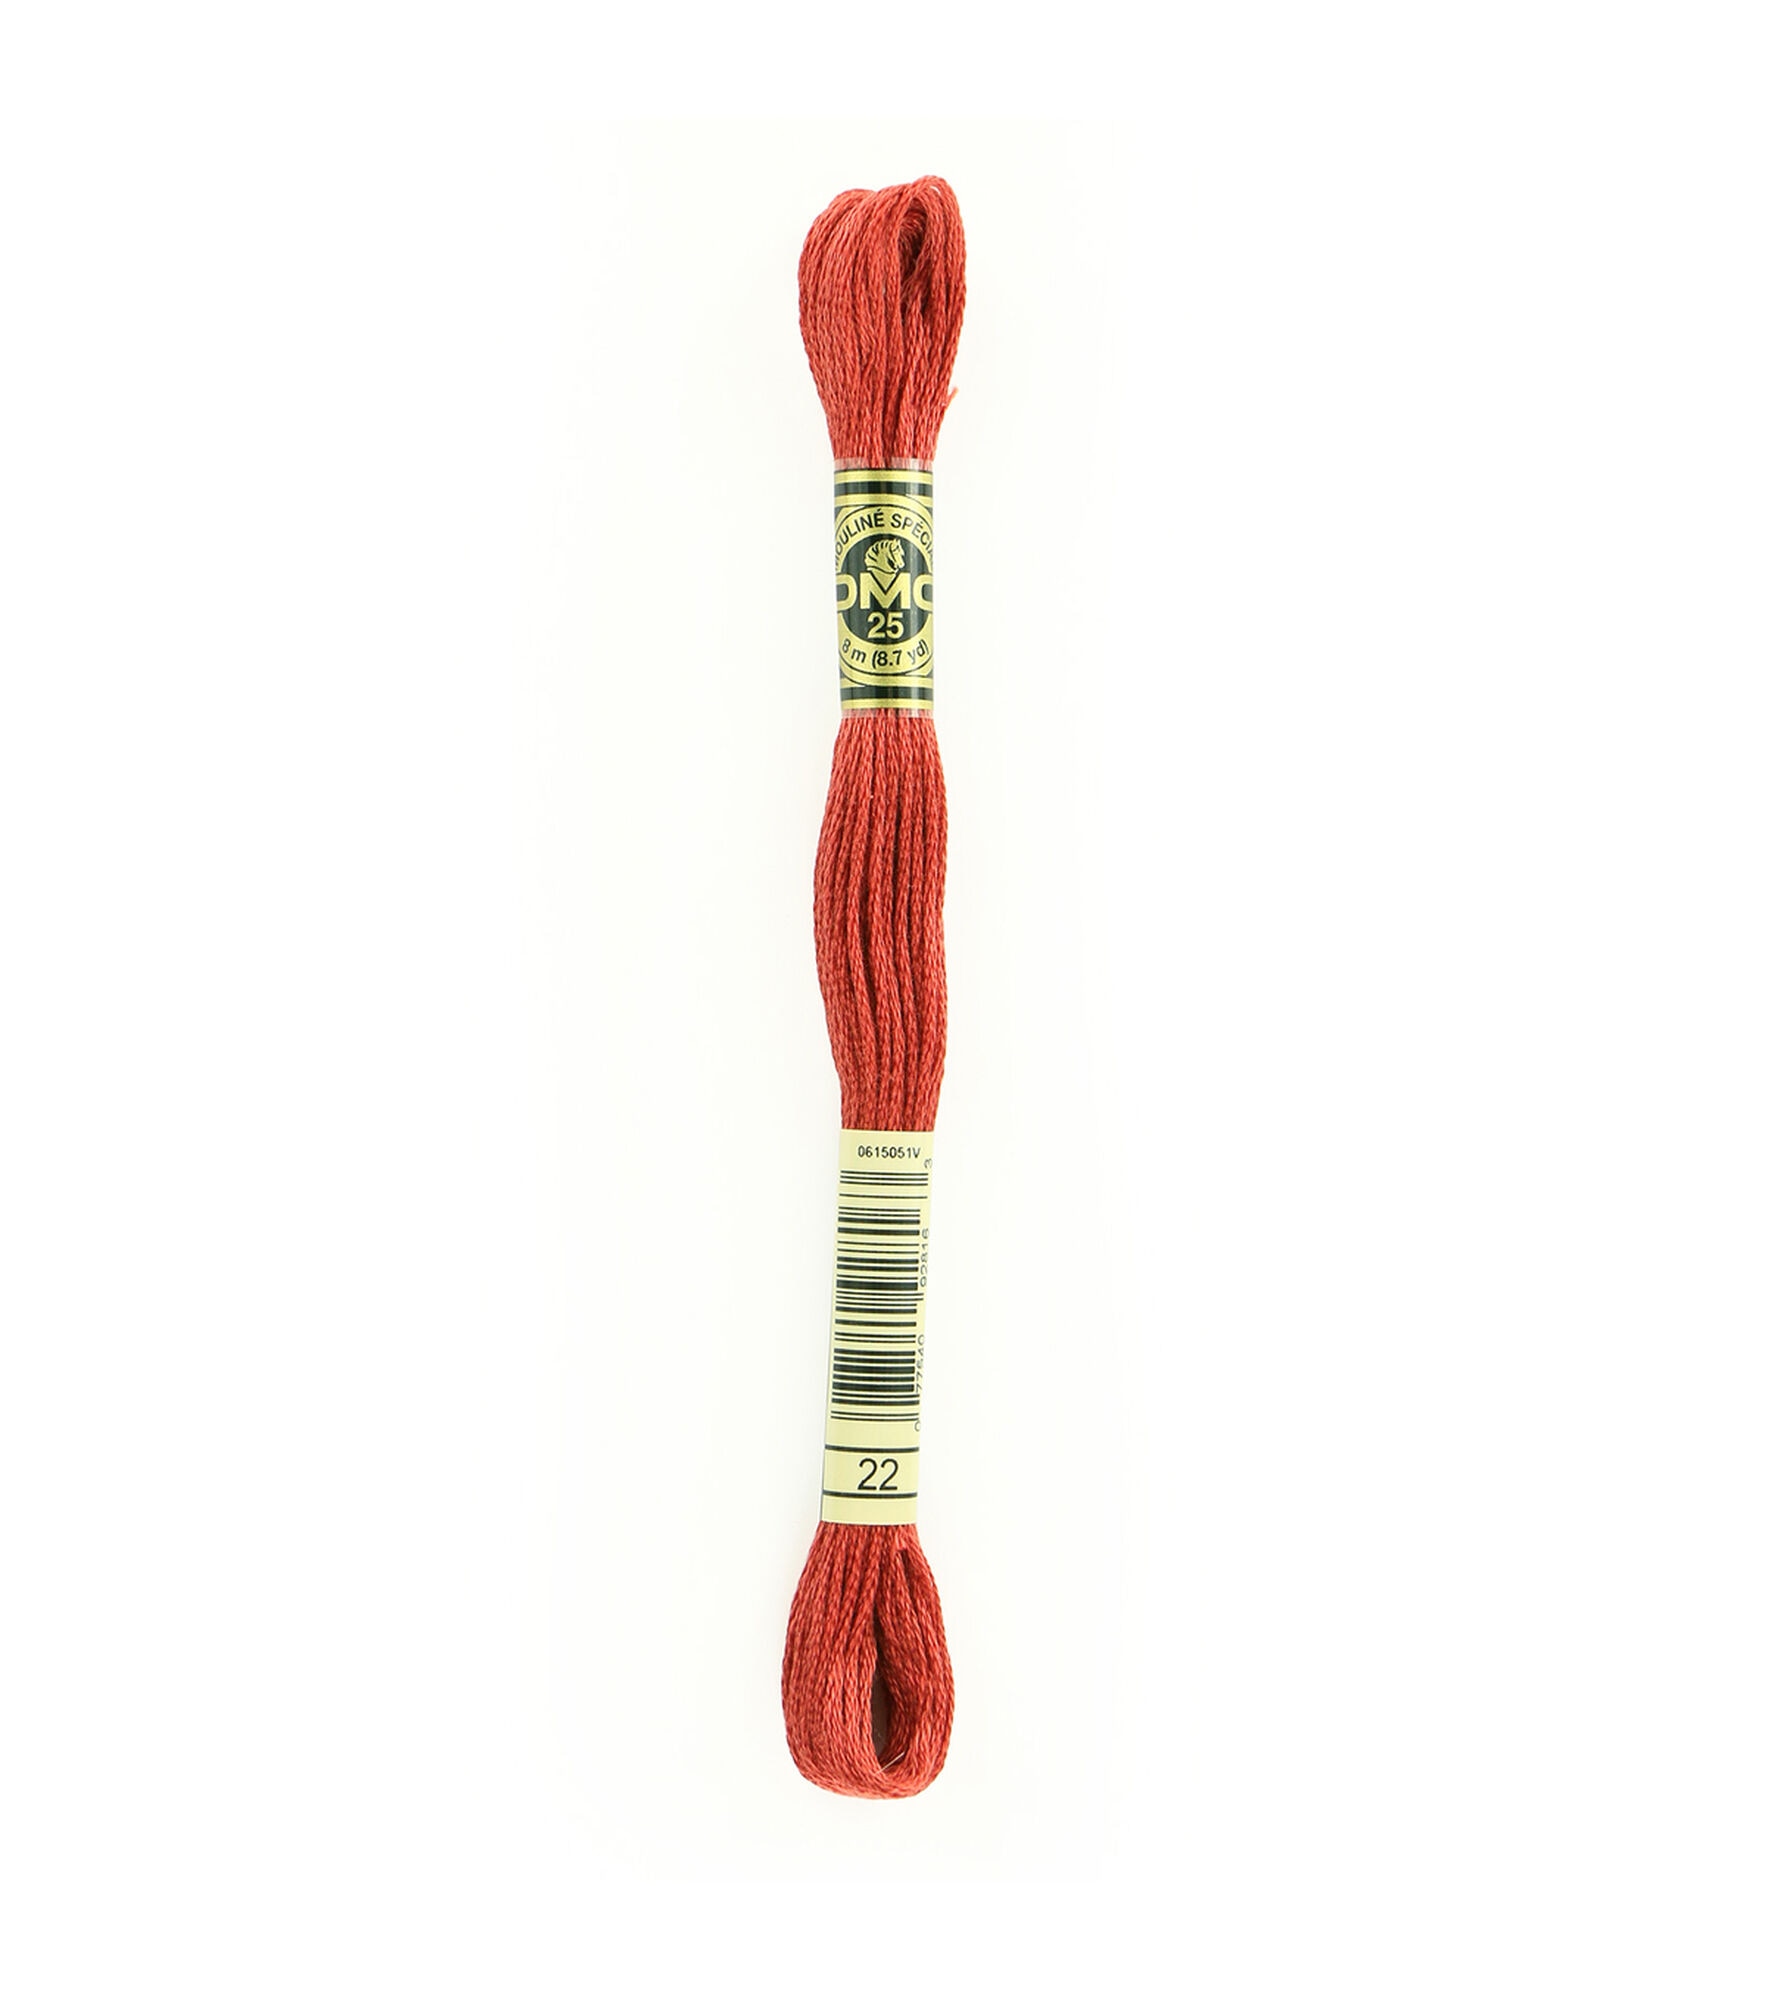 50 Color Premium Cotton Embroidery Floss Set - Six Strand Thread